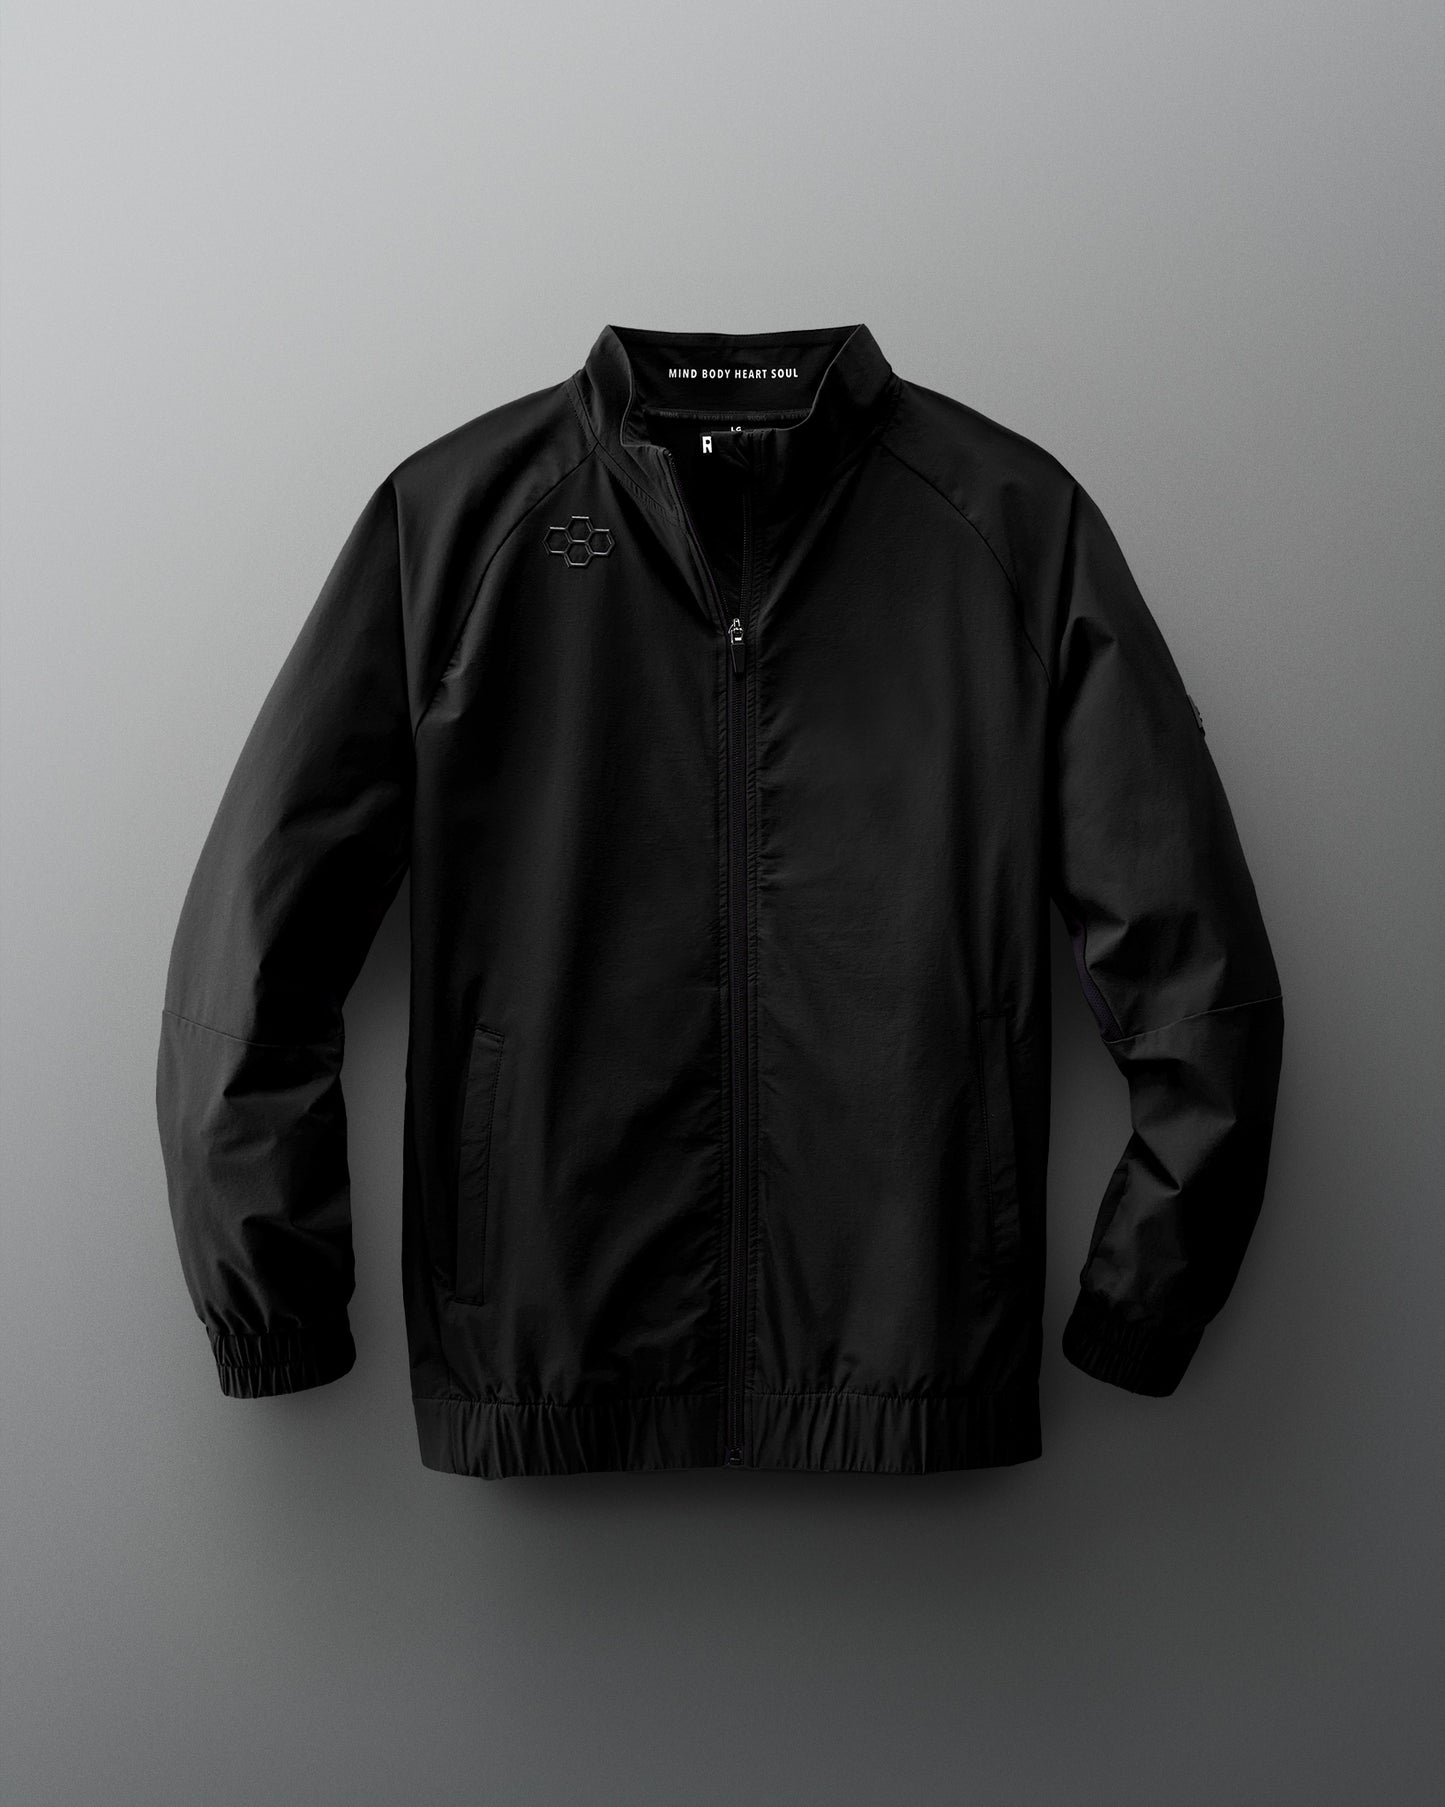 RUDIS Performance Uniform Jacket - Black